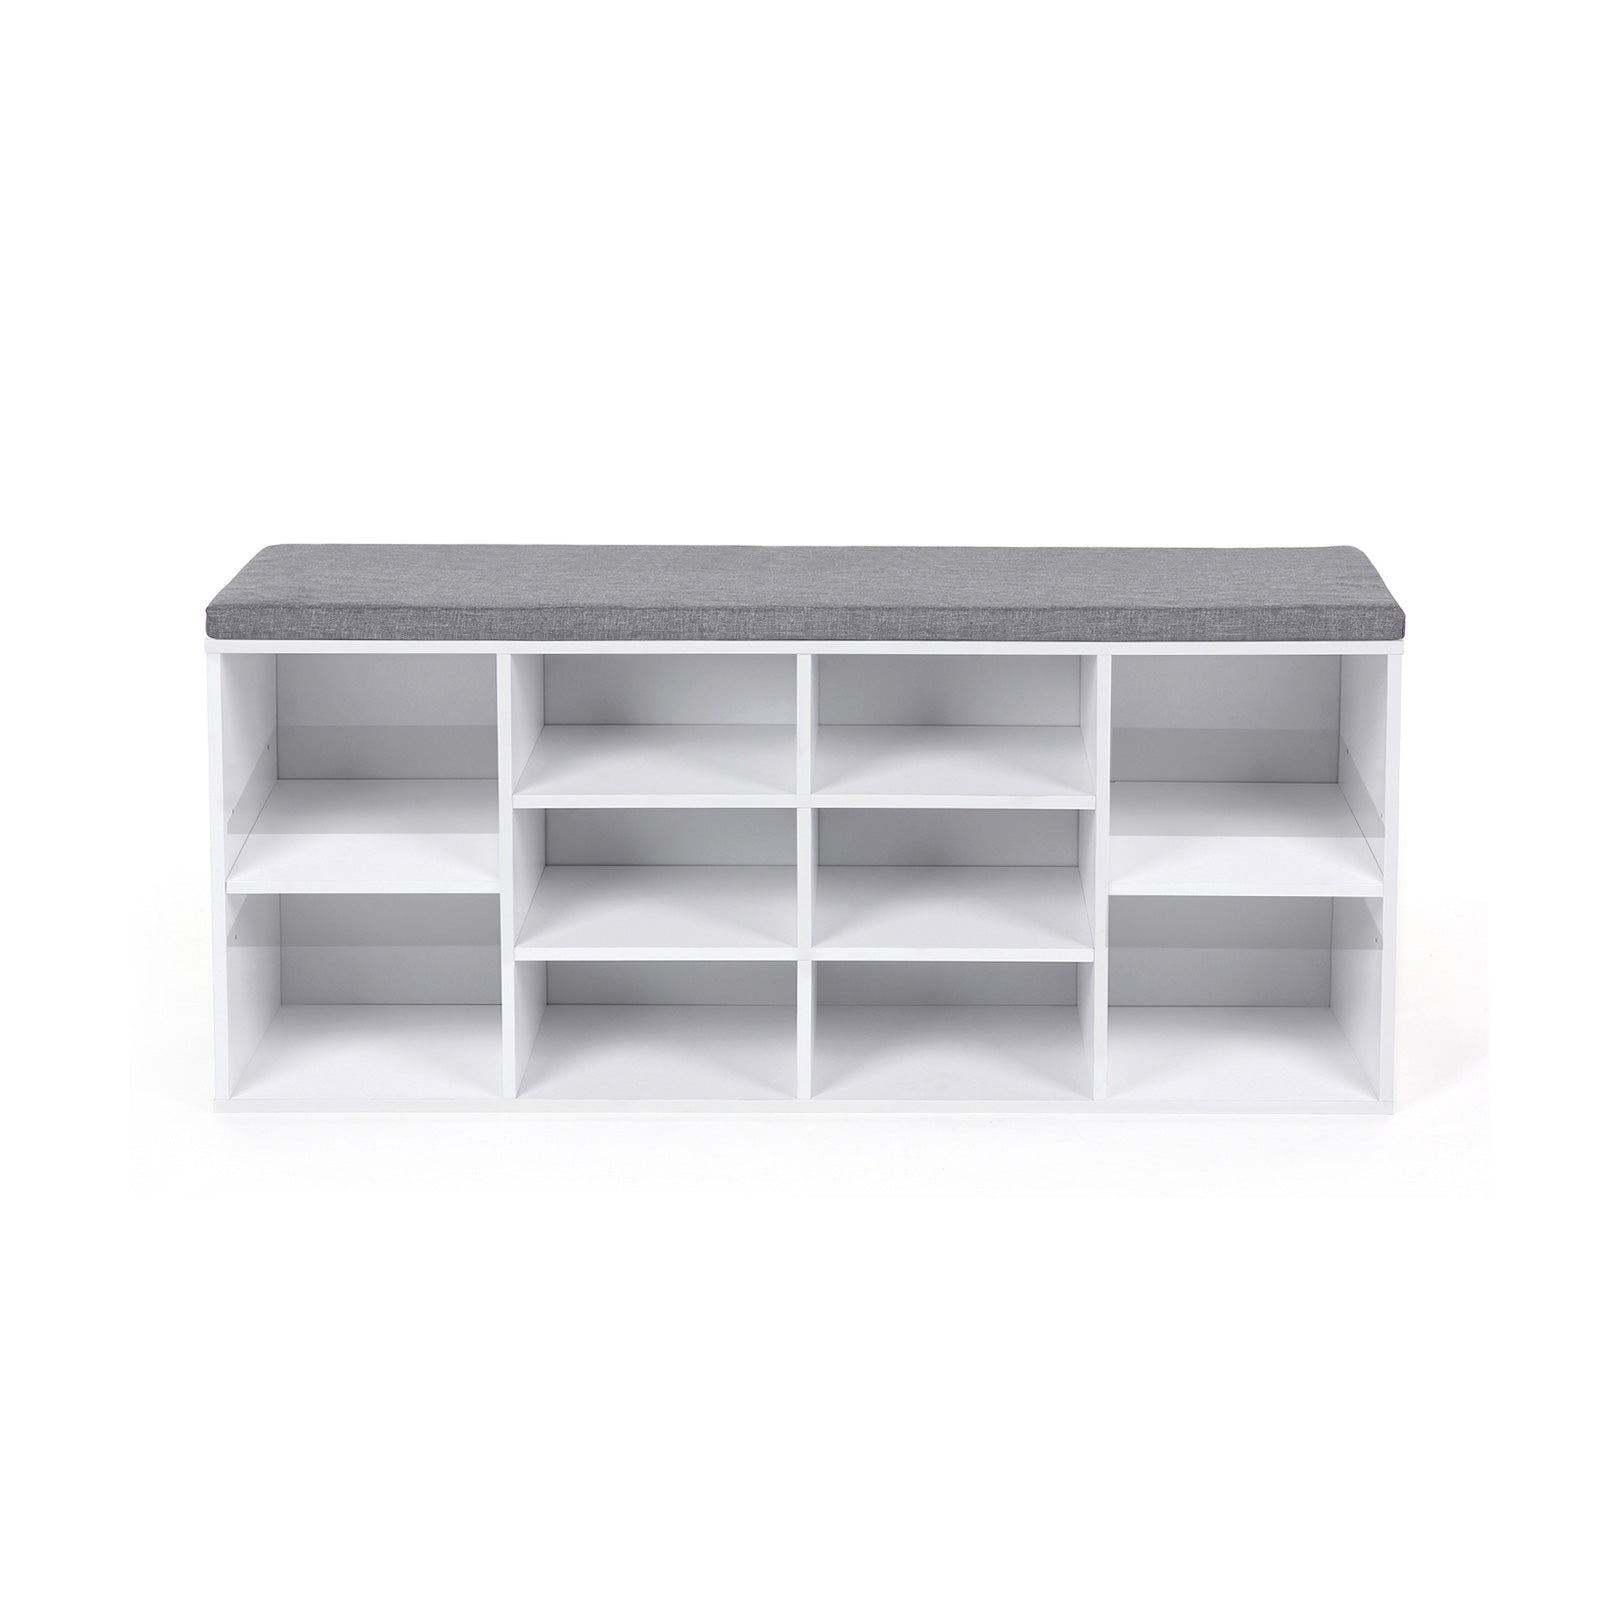 Schuhbank 104 x 30 x 48 cm bis 150 kg belastbar Weiß-Grau